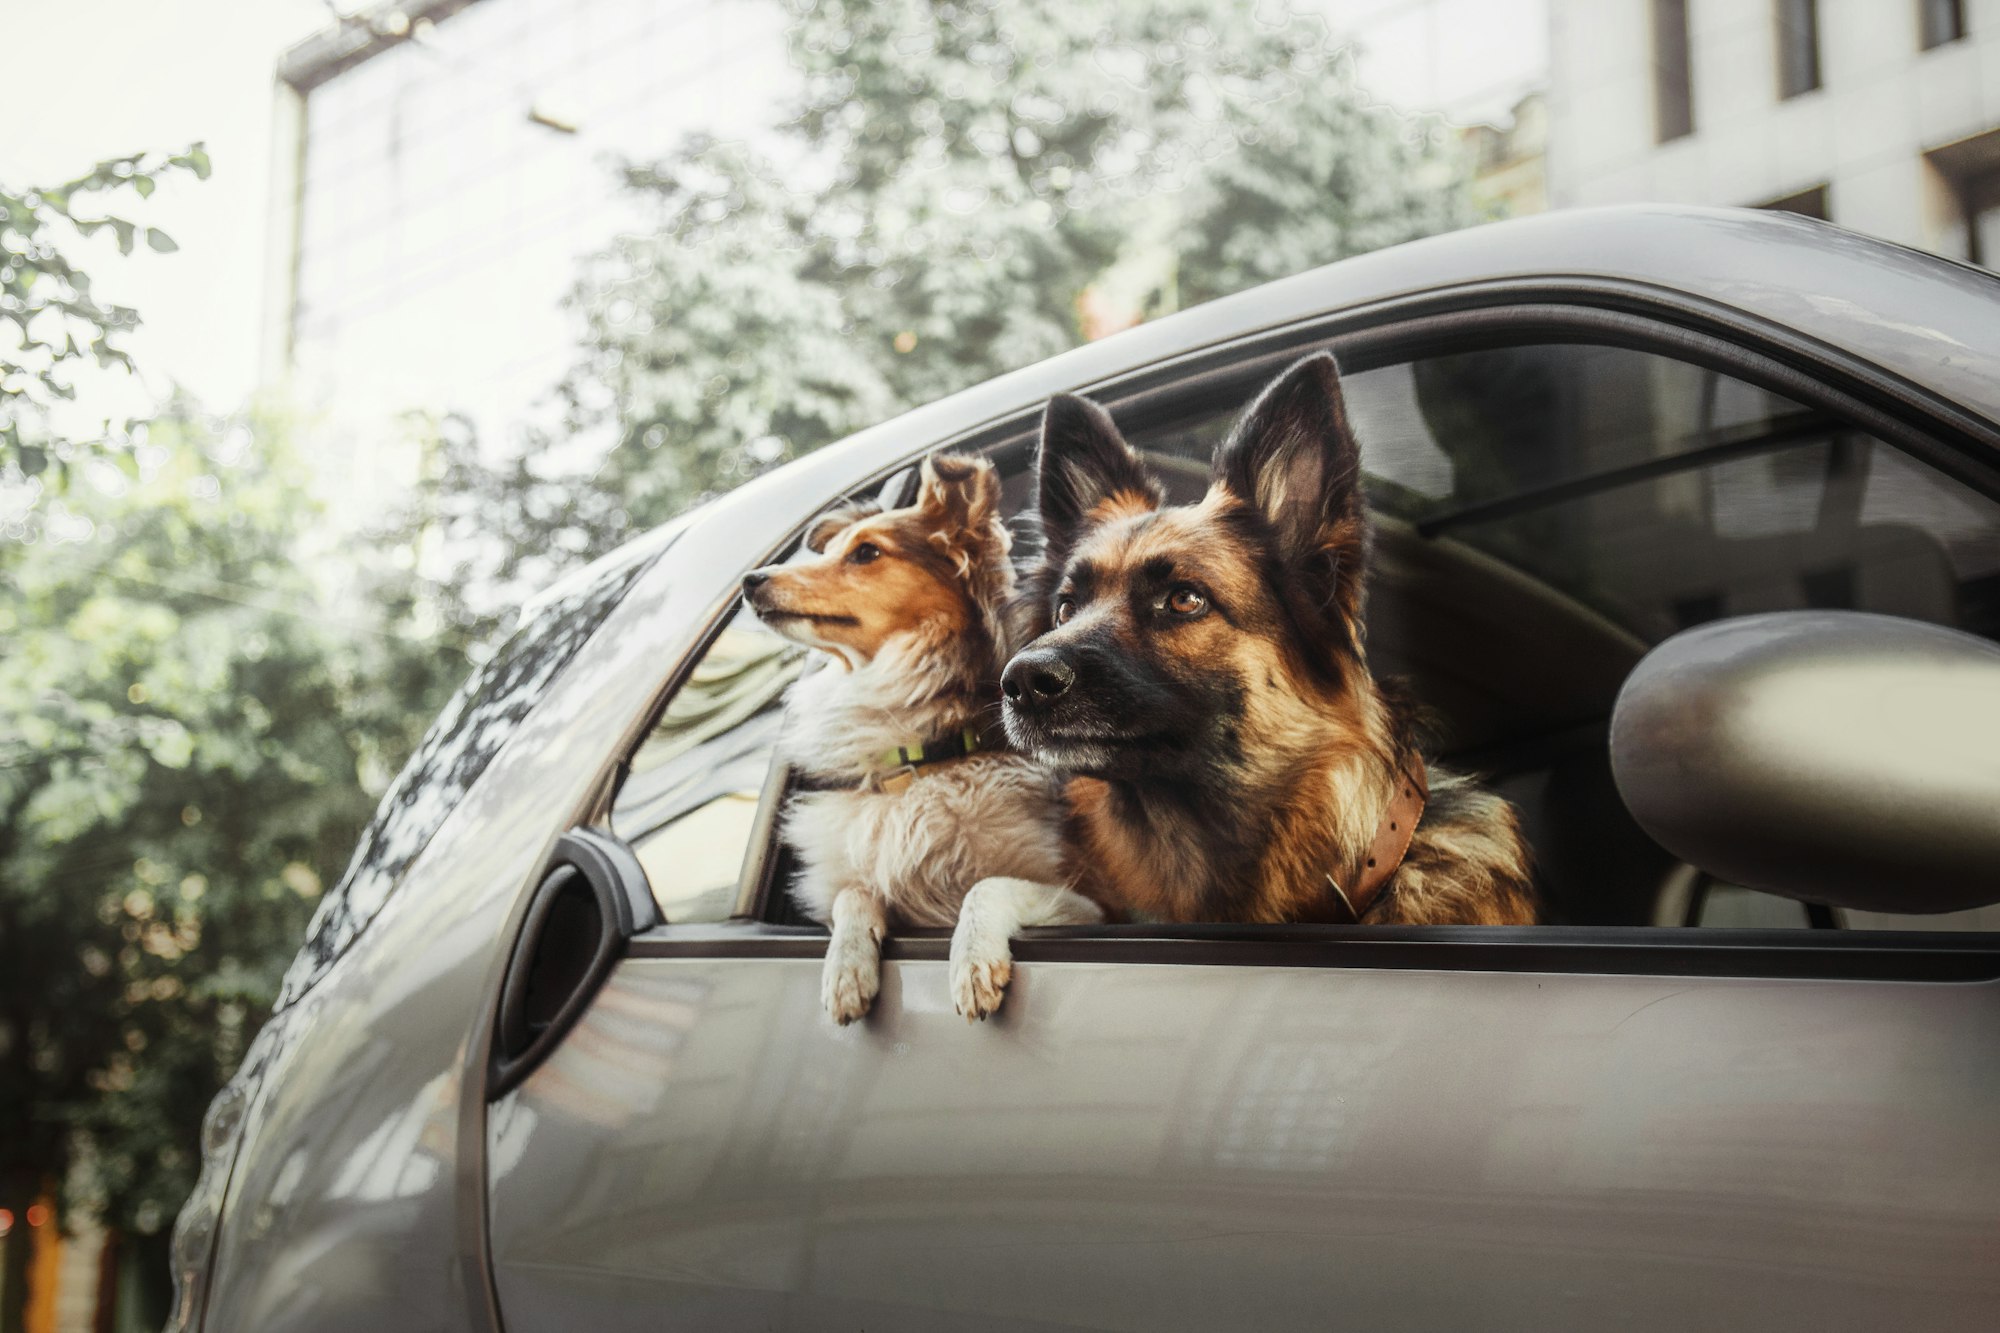 Road trip joy: Happy dog gazes out of the car window. Pet-friendly journey.